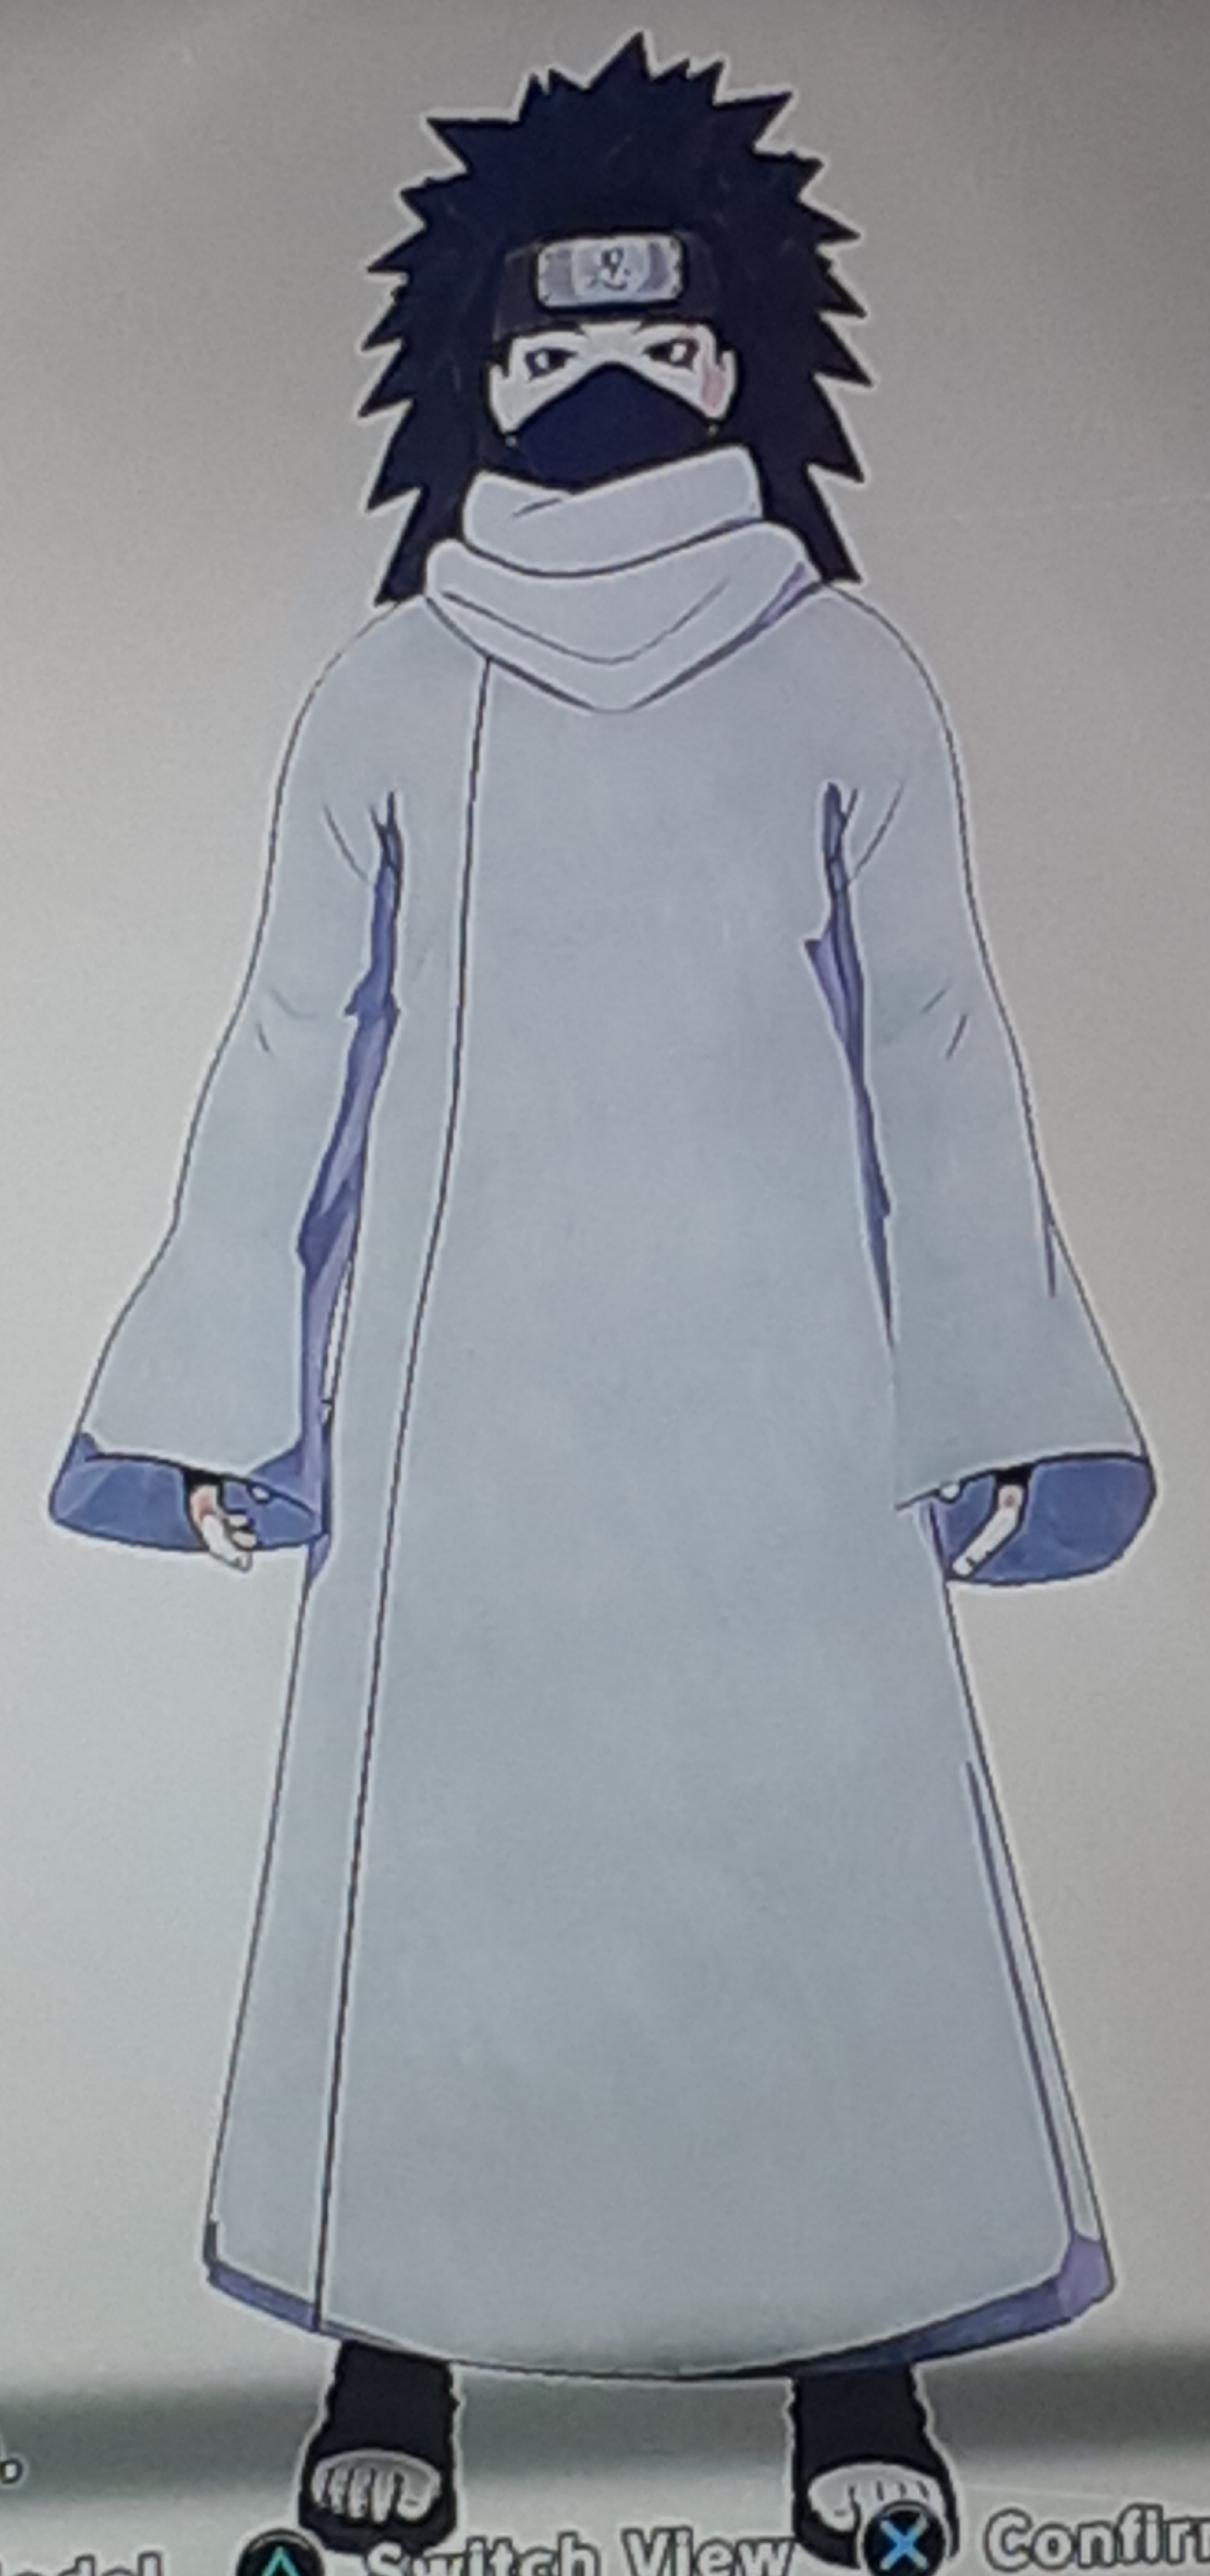 I edited a photo of hokage Naruto by drawing his manga outfit